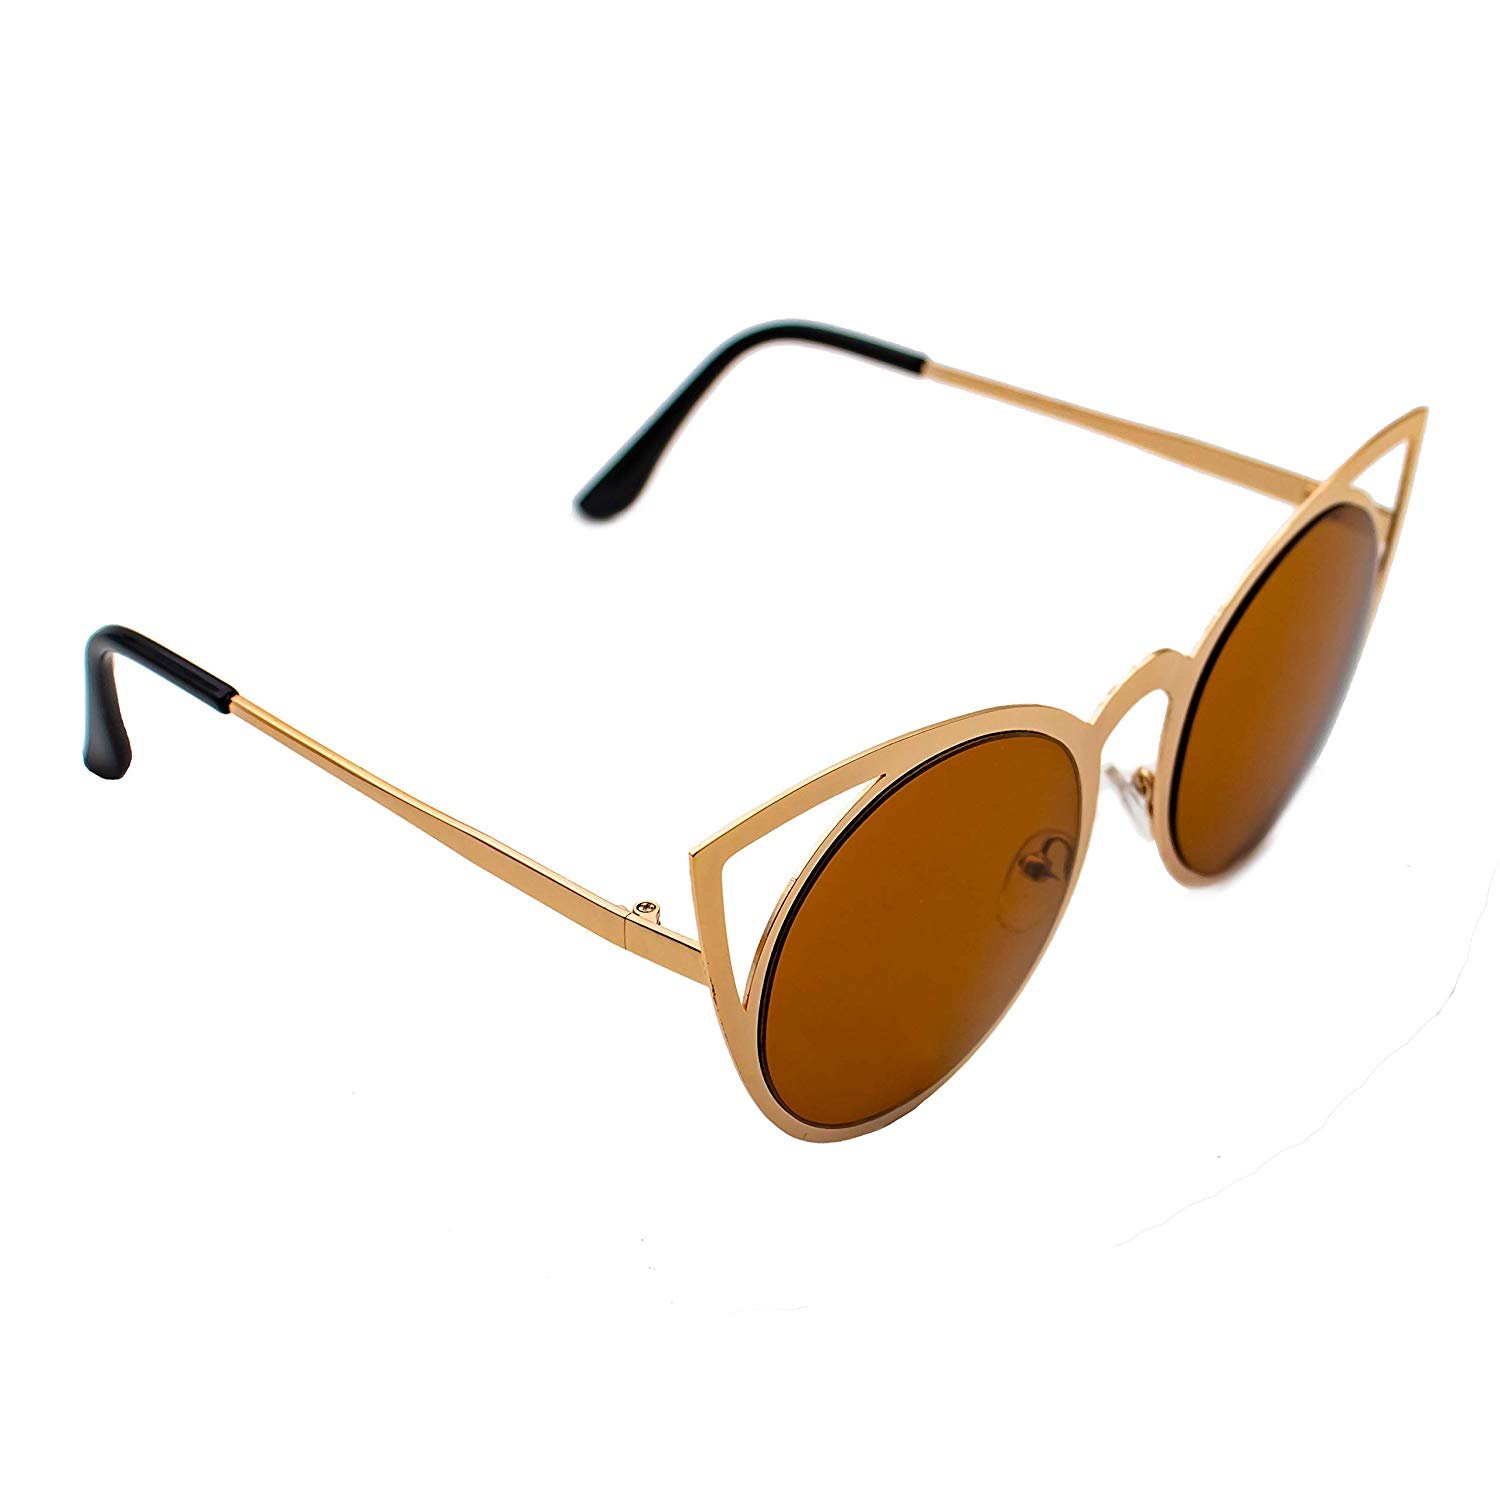 B-THERE Fashion Sunglasses Women Brand Designer Cat Eye Sun Glasses Vintage Woman (Golden/Brown Lens) - image 2 of 2